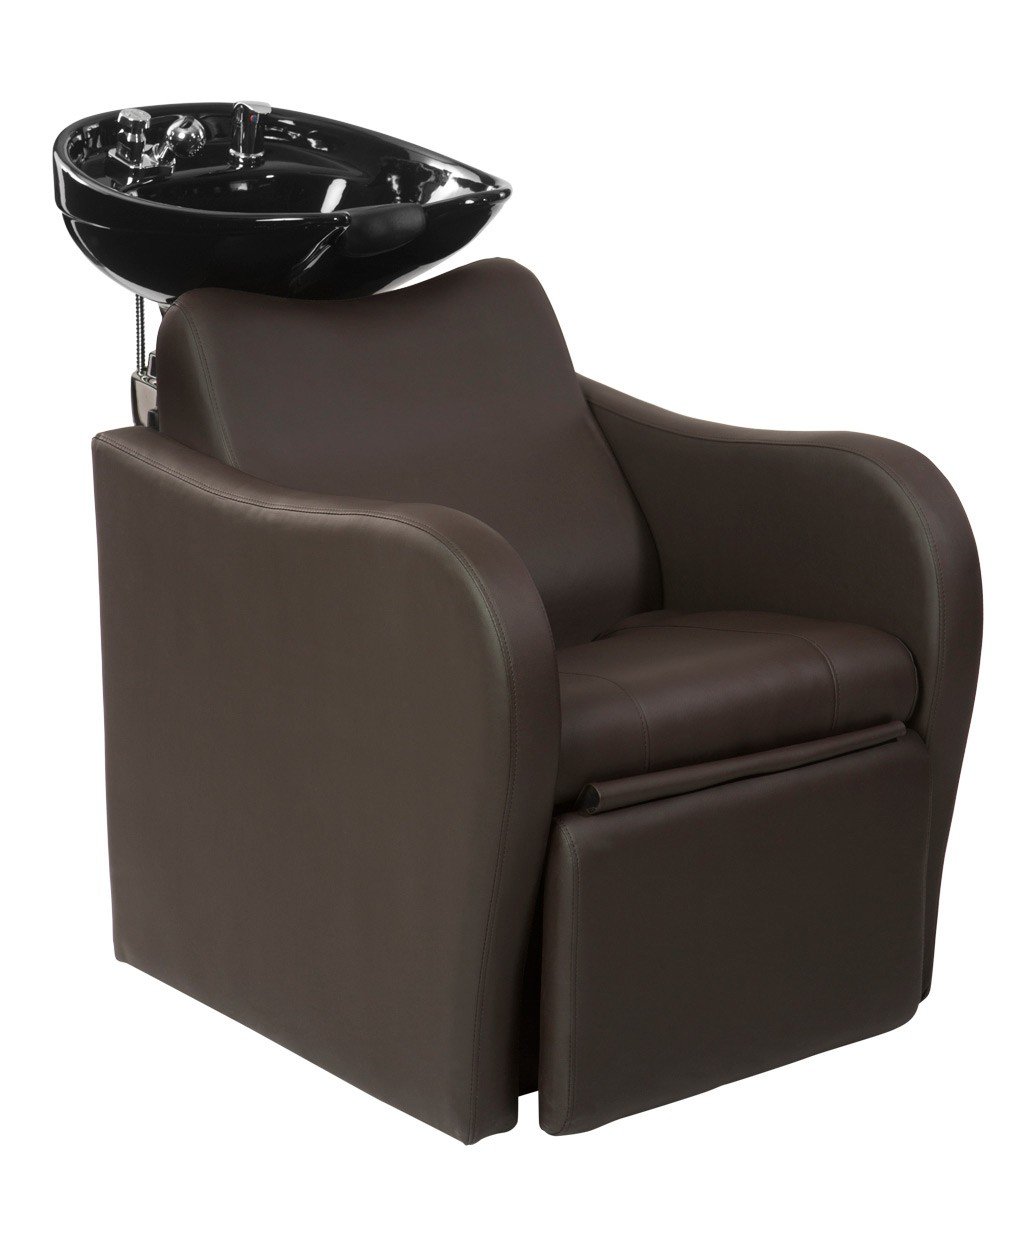 Lexus Shampoo Backwash Unit For Professional Salons Shampoo Chair with ...